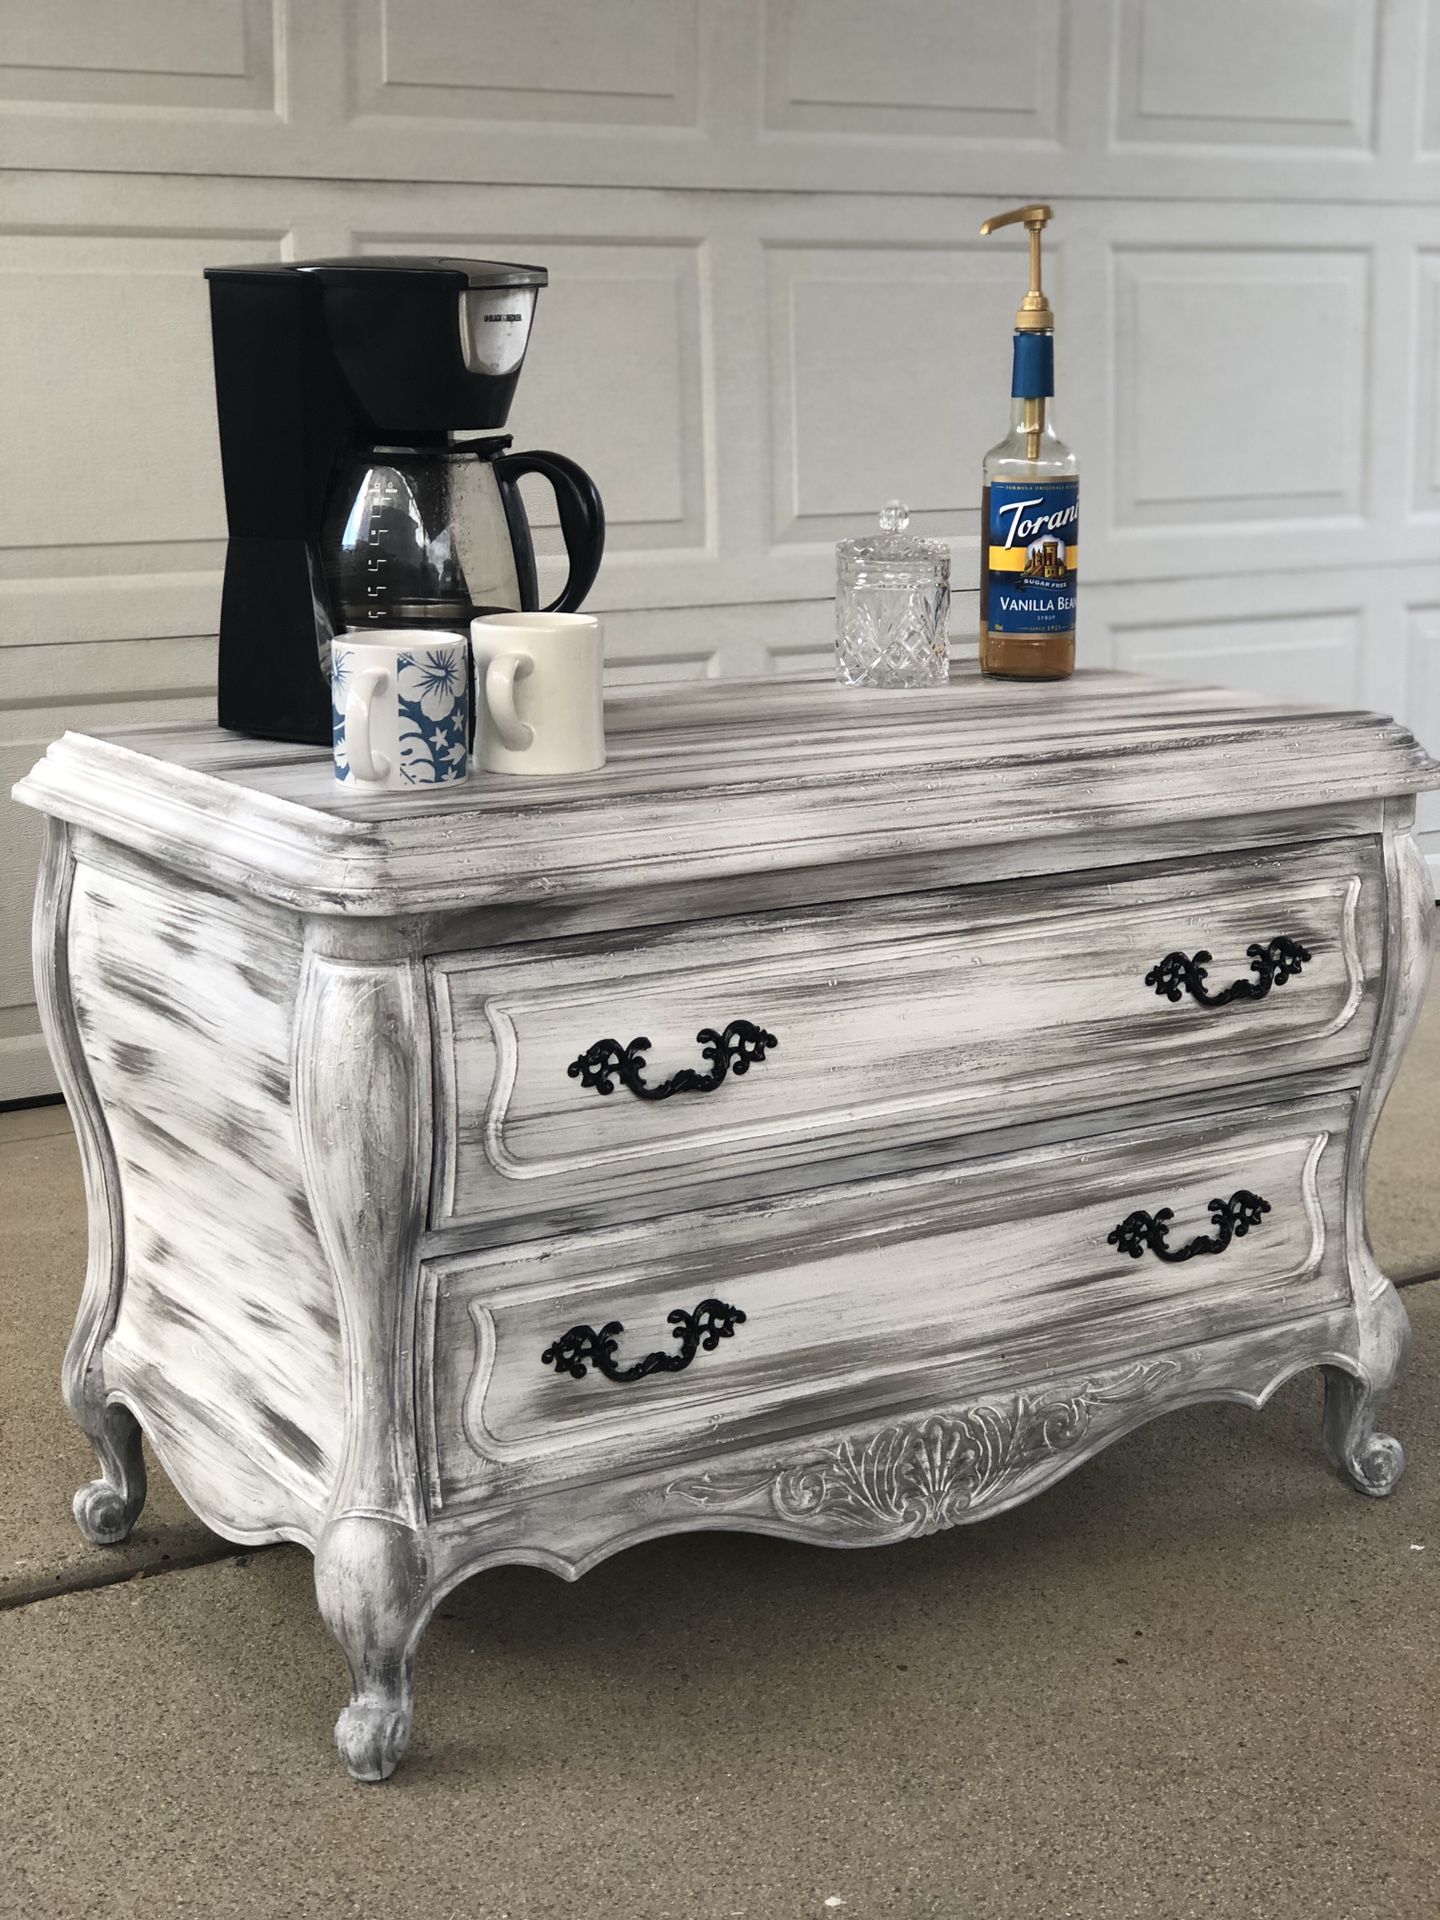 Coffee bar / end table